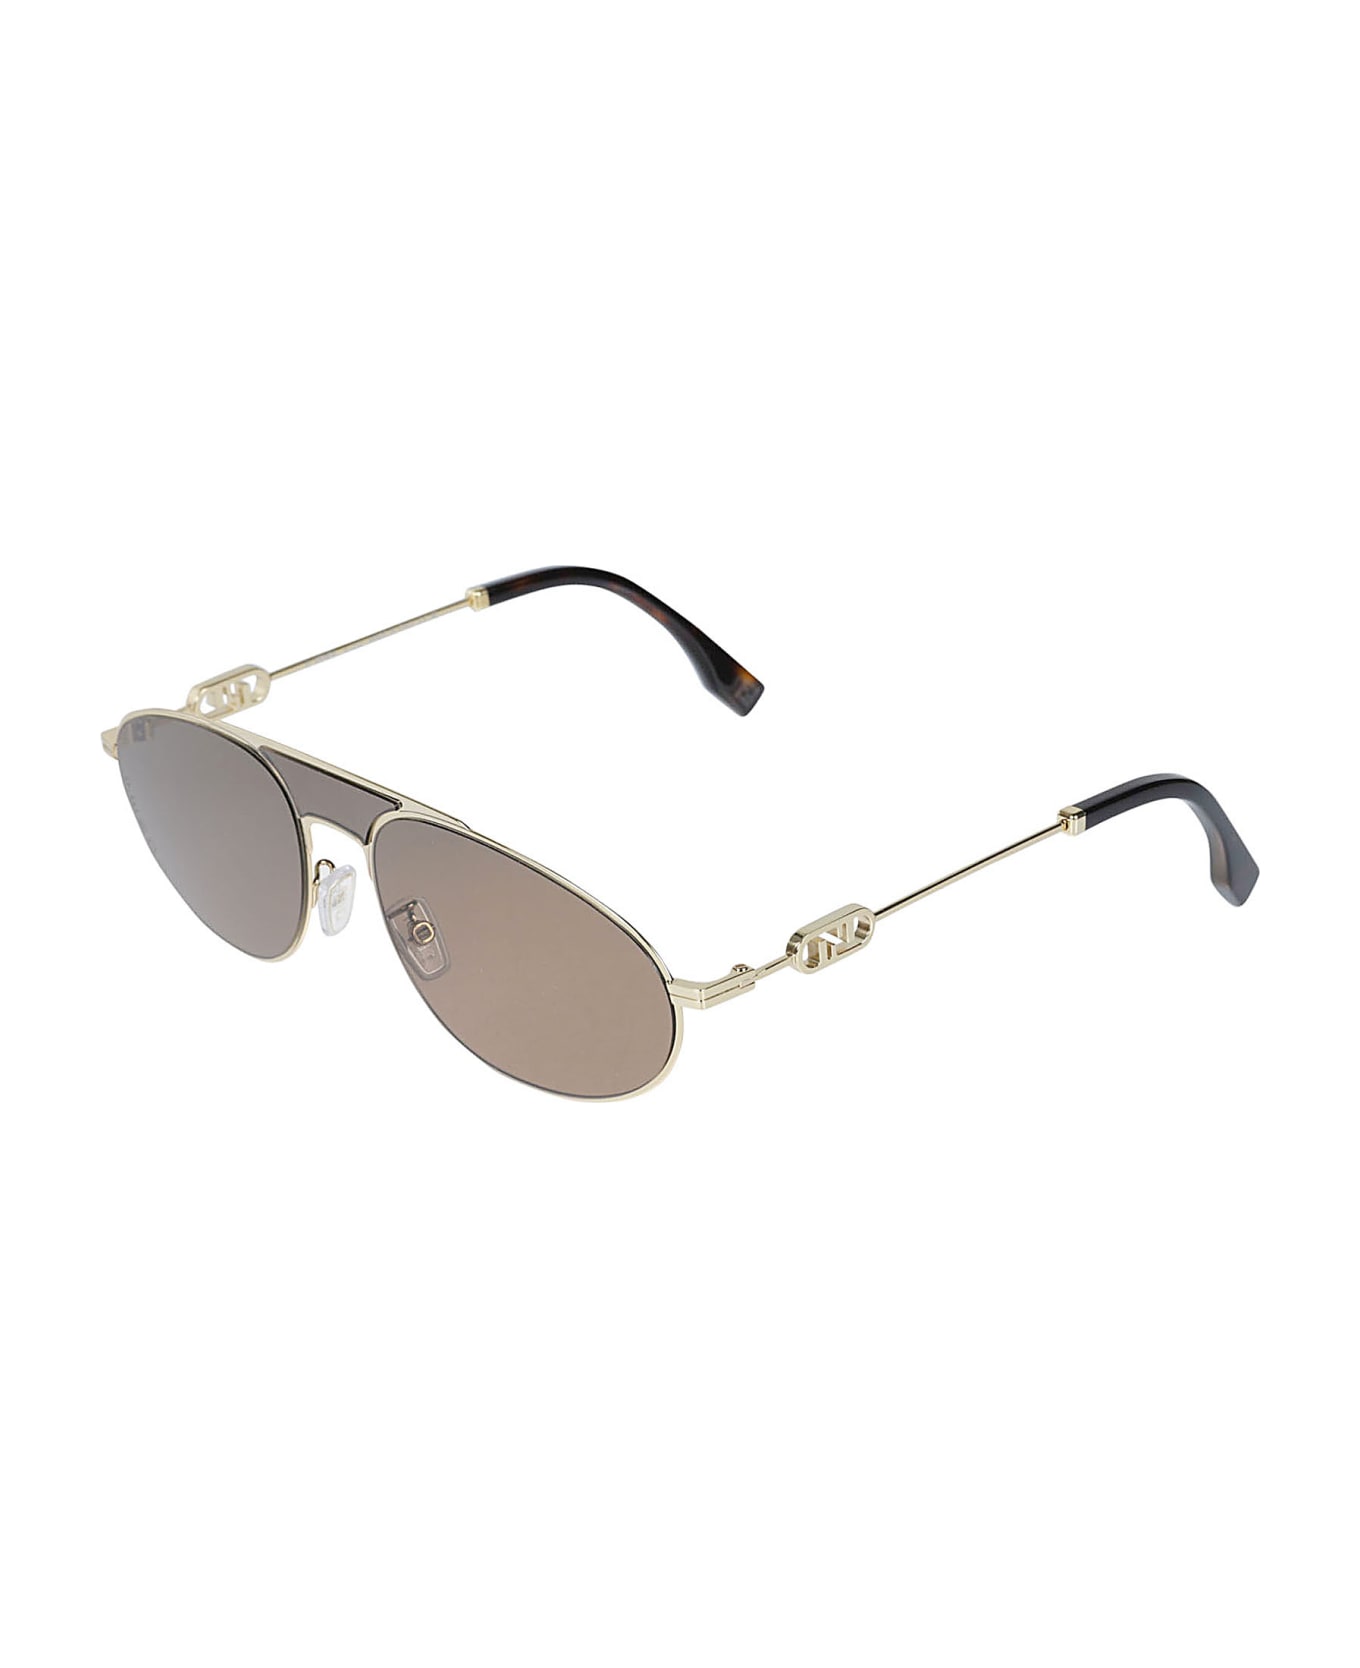 Fendi Eyewear Oval Aviator Sunglasses - 30e サングラス